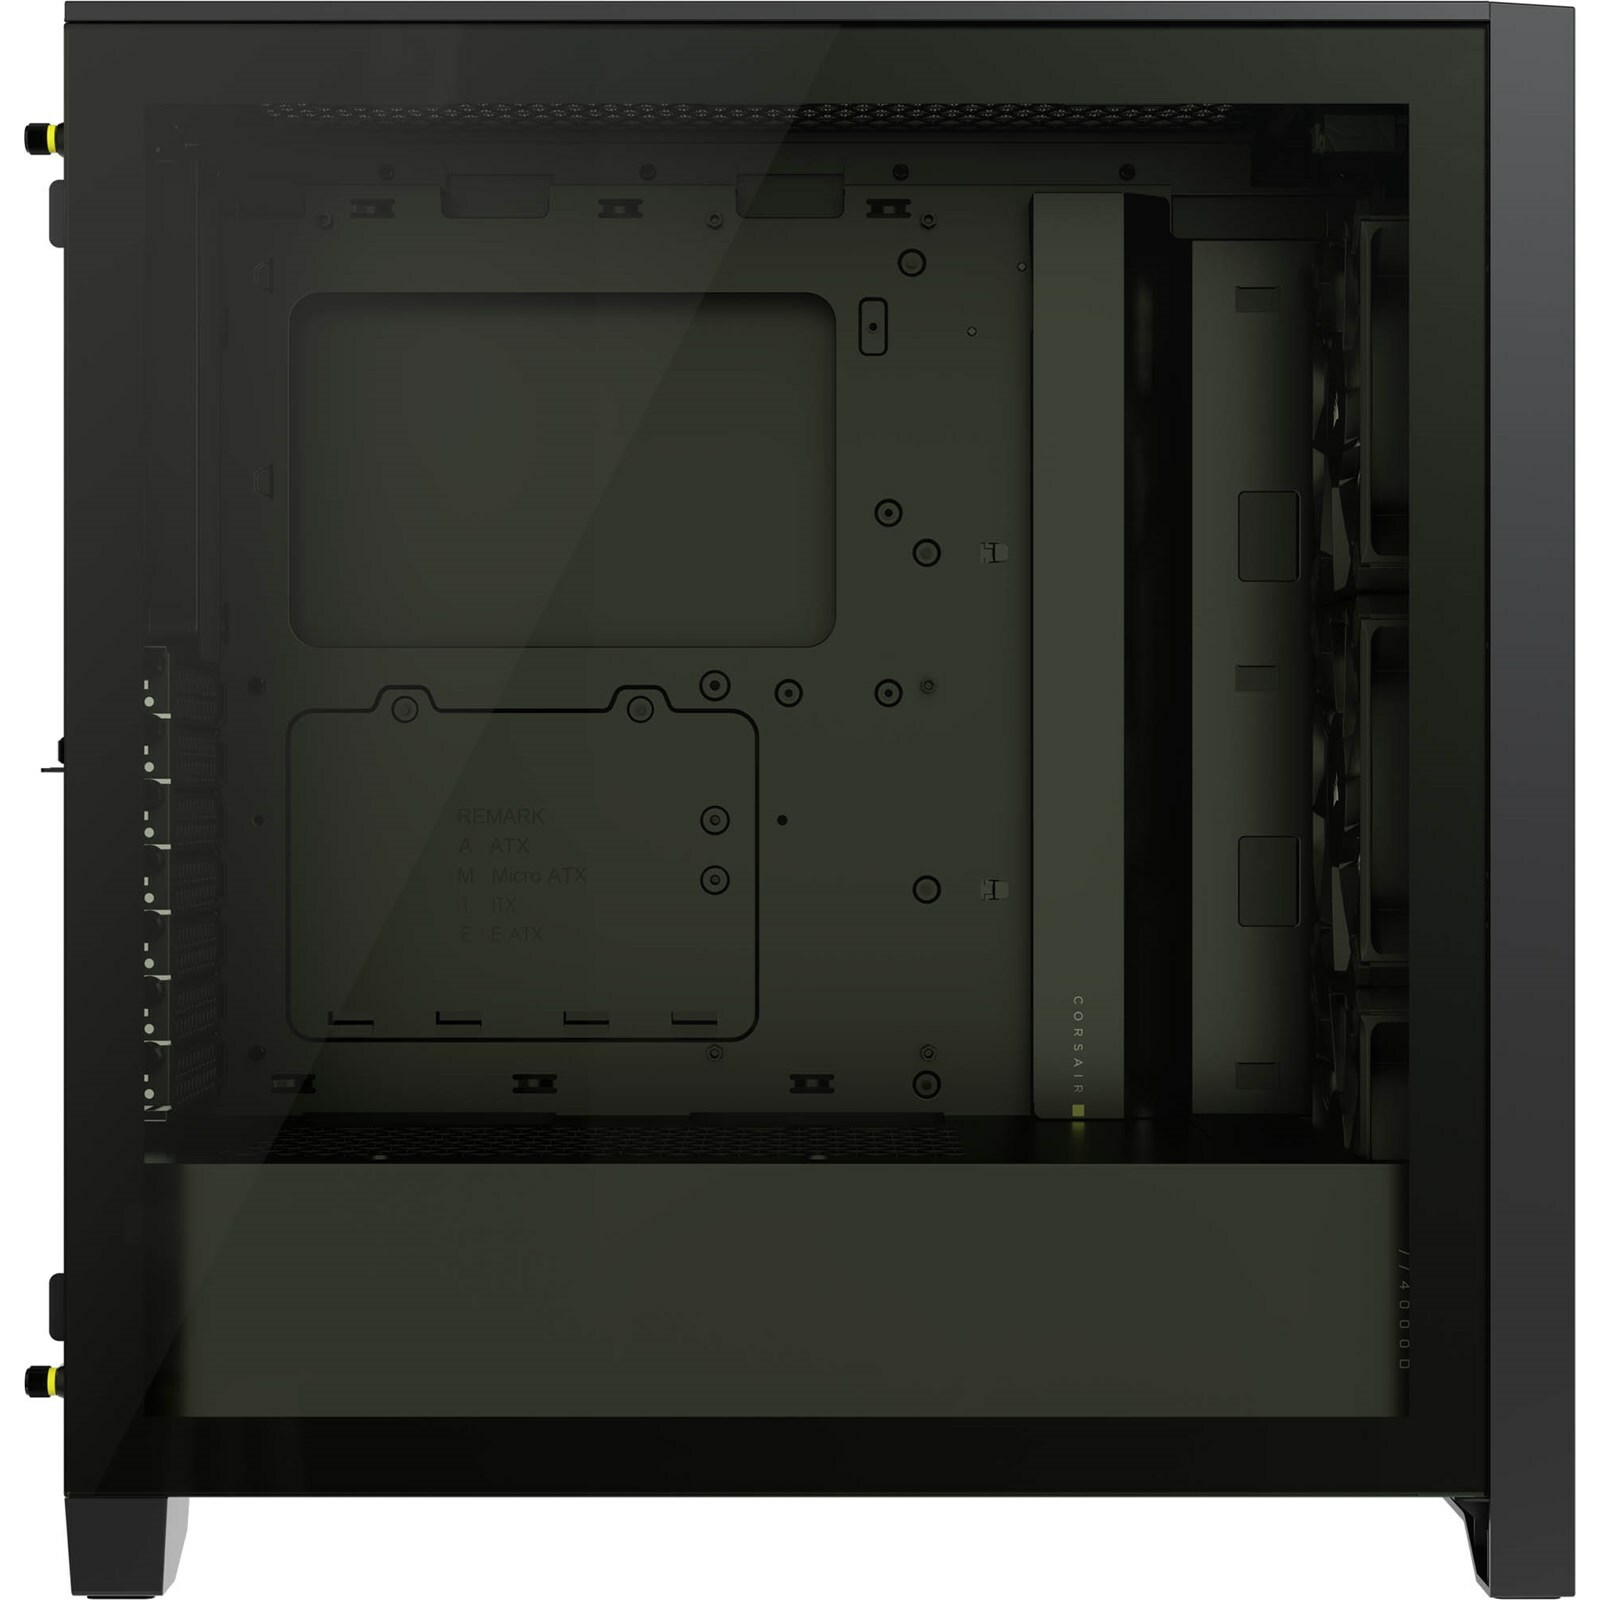  Corsair iCUE 4000D RGB Mid-Tower Case - 3X AF120 RGB